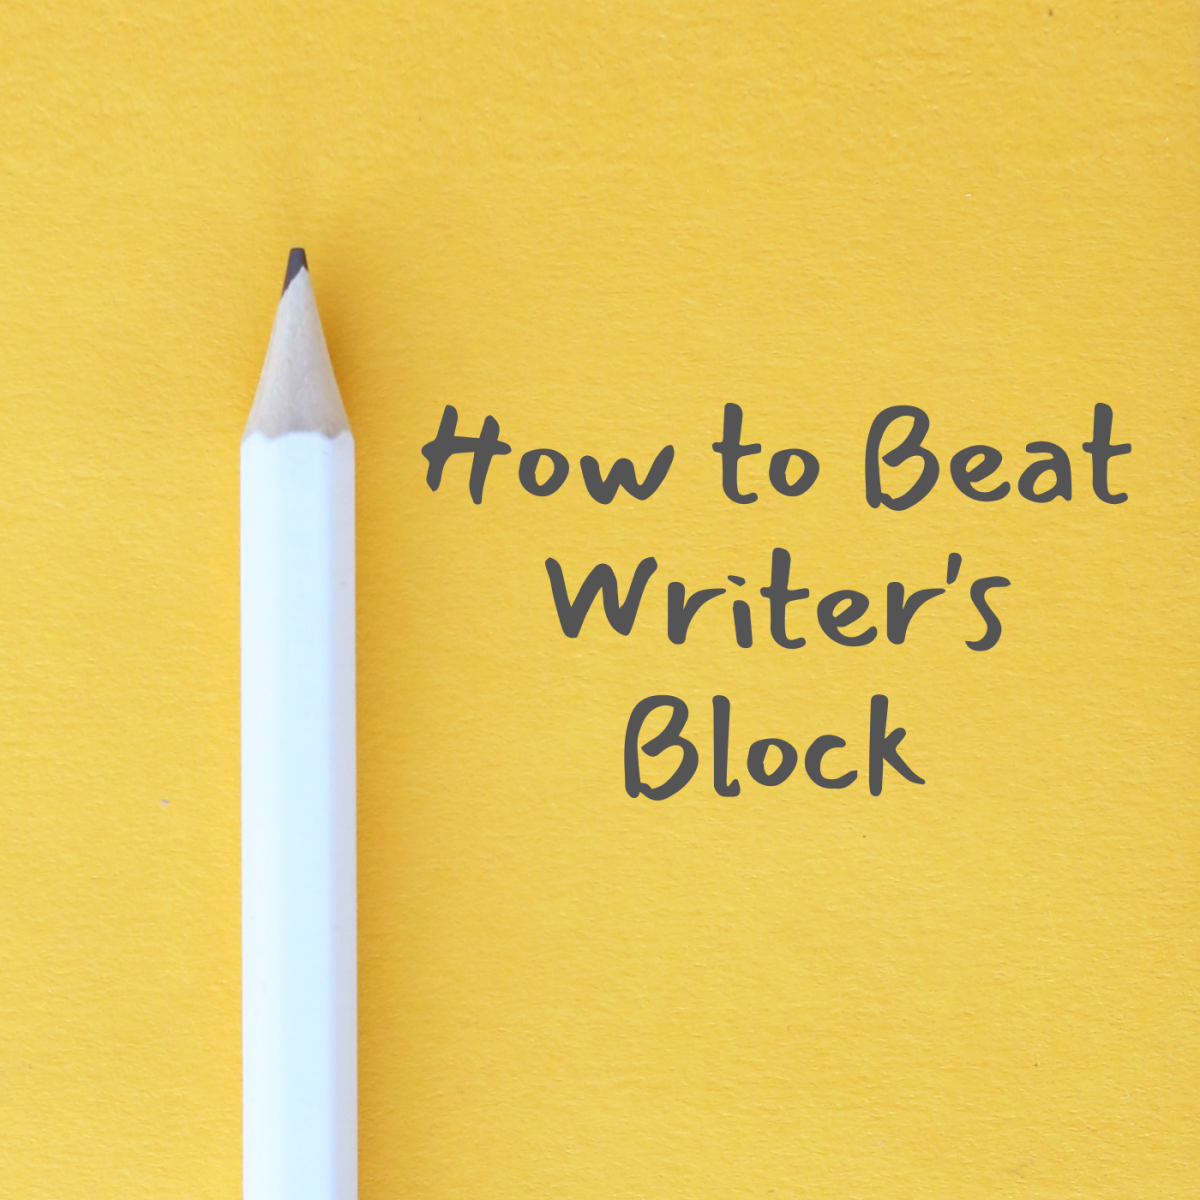 5 Ways to Defeat Writer's Block